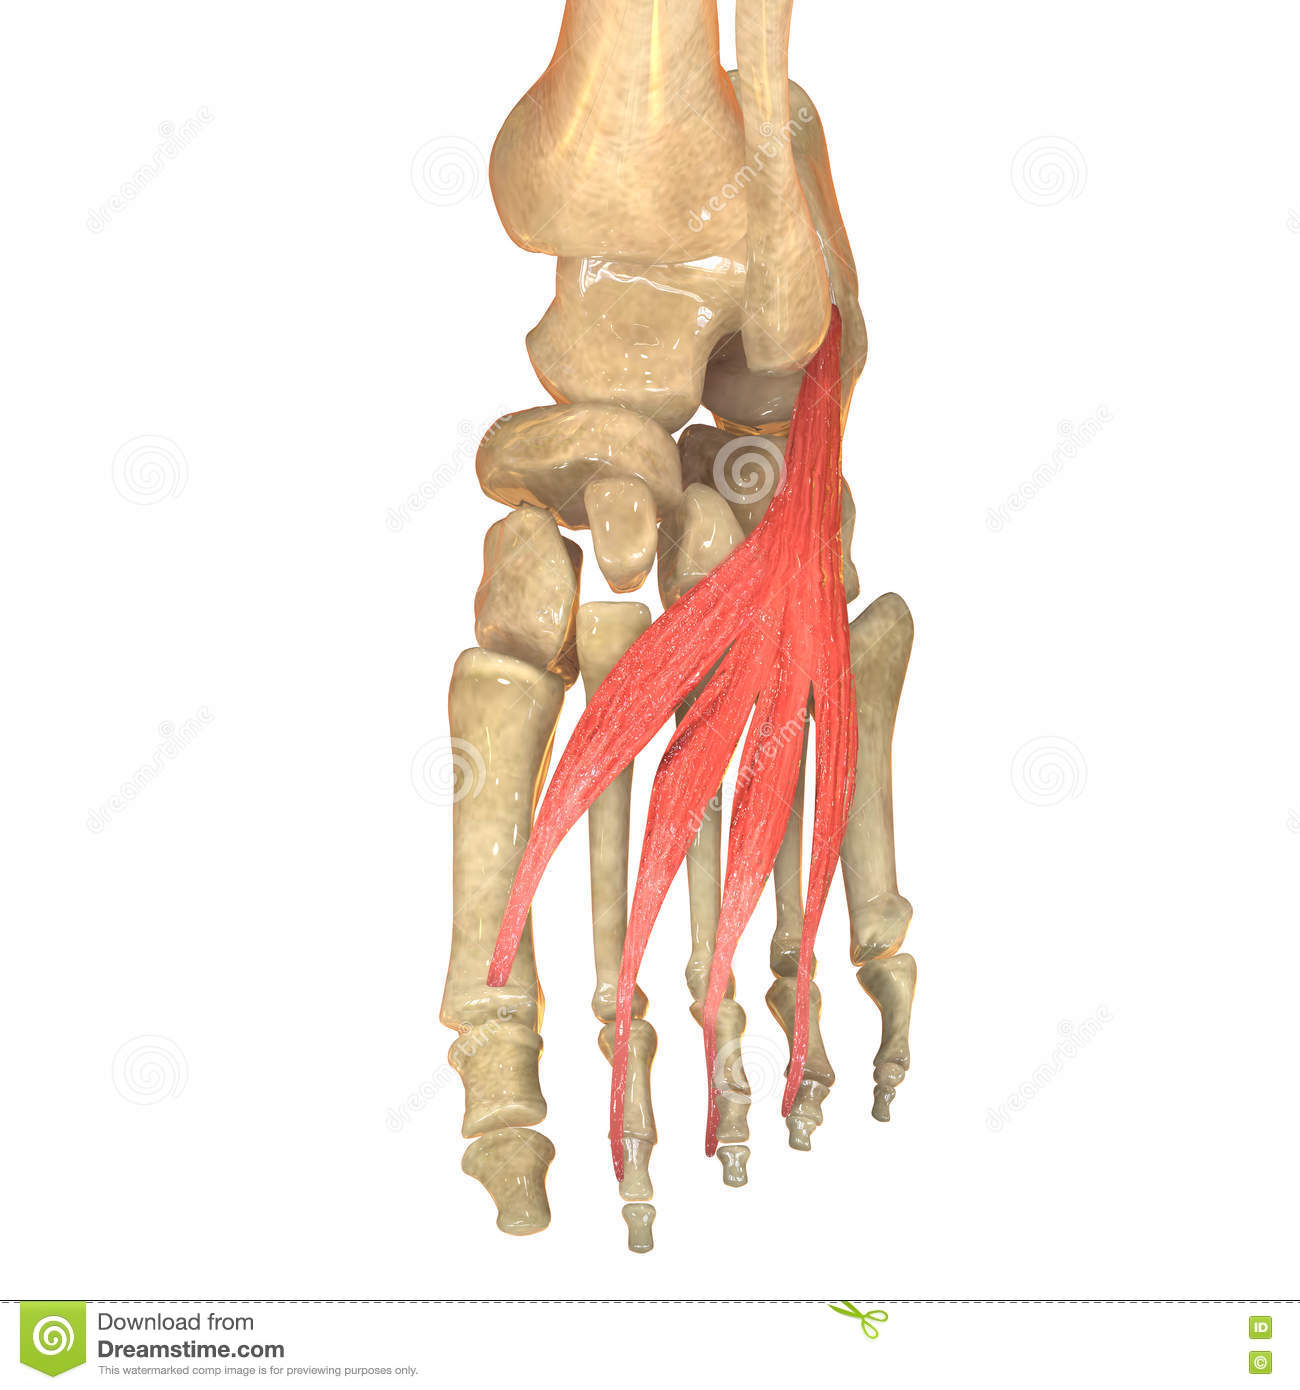 human-body-muscles-anatomy-extensor-digitorum-brevis-d-illustration-75784868.jpg